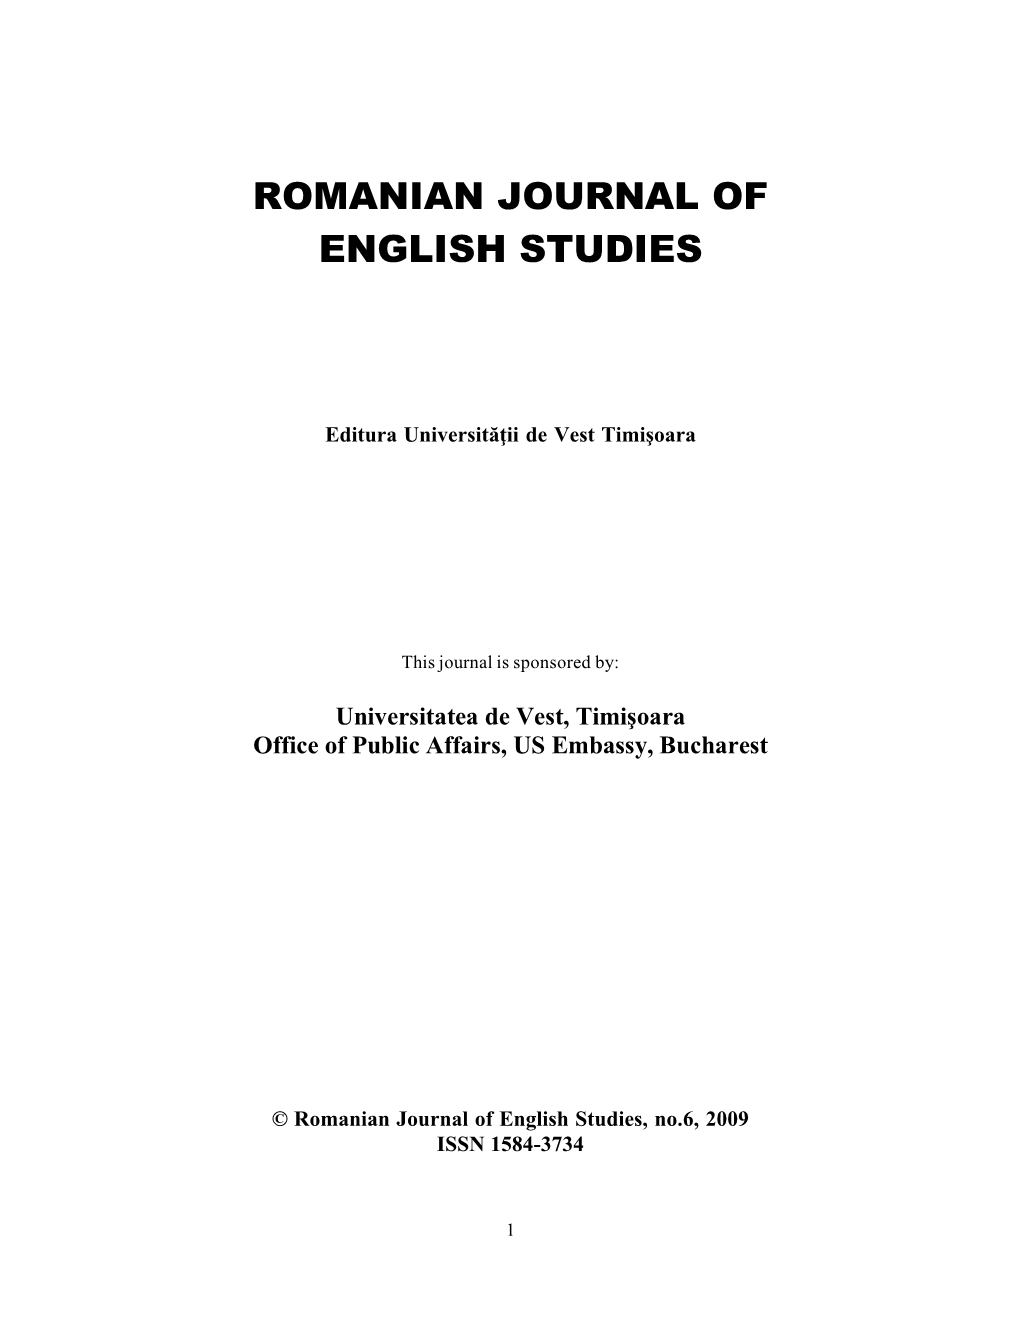 Romanian Journal of English Studies